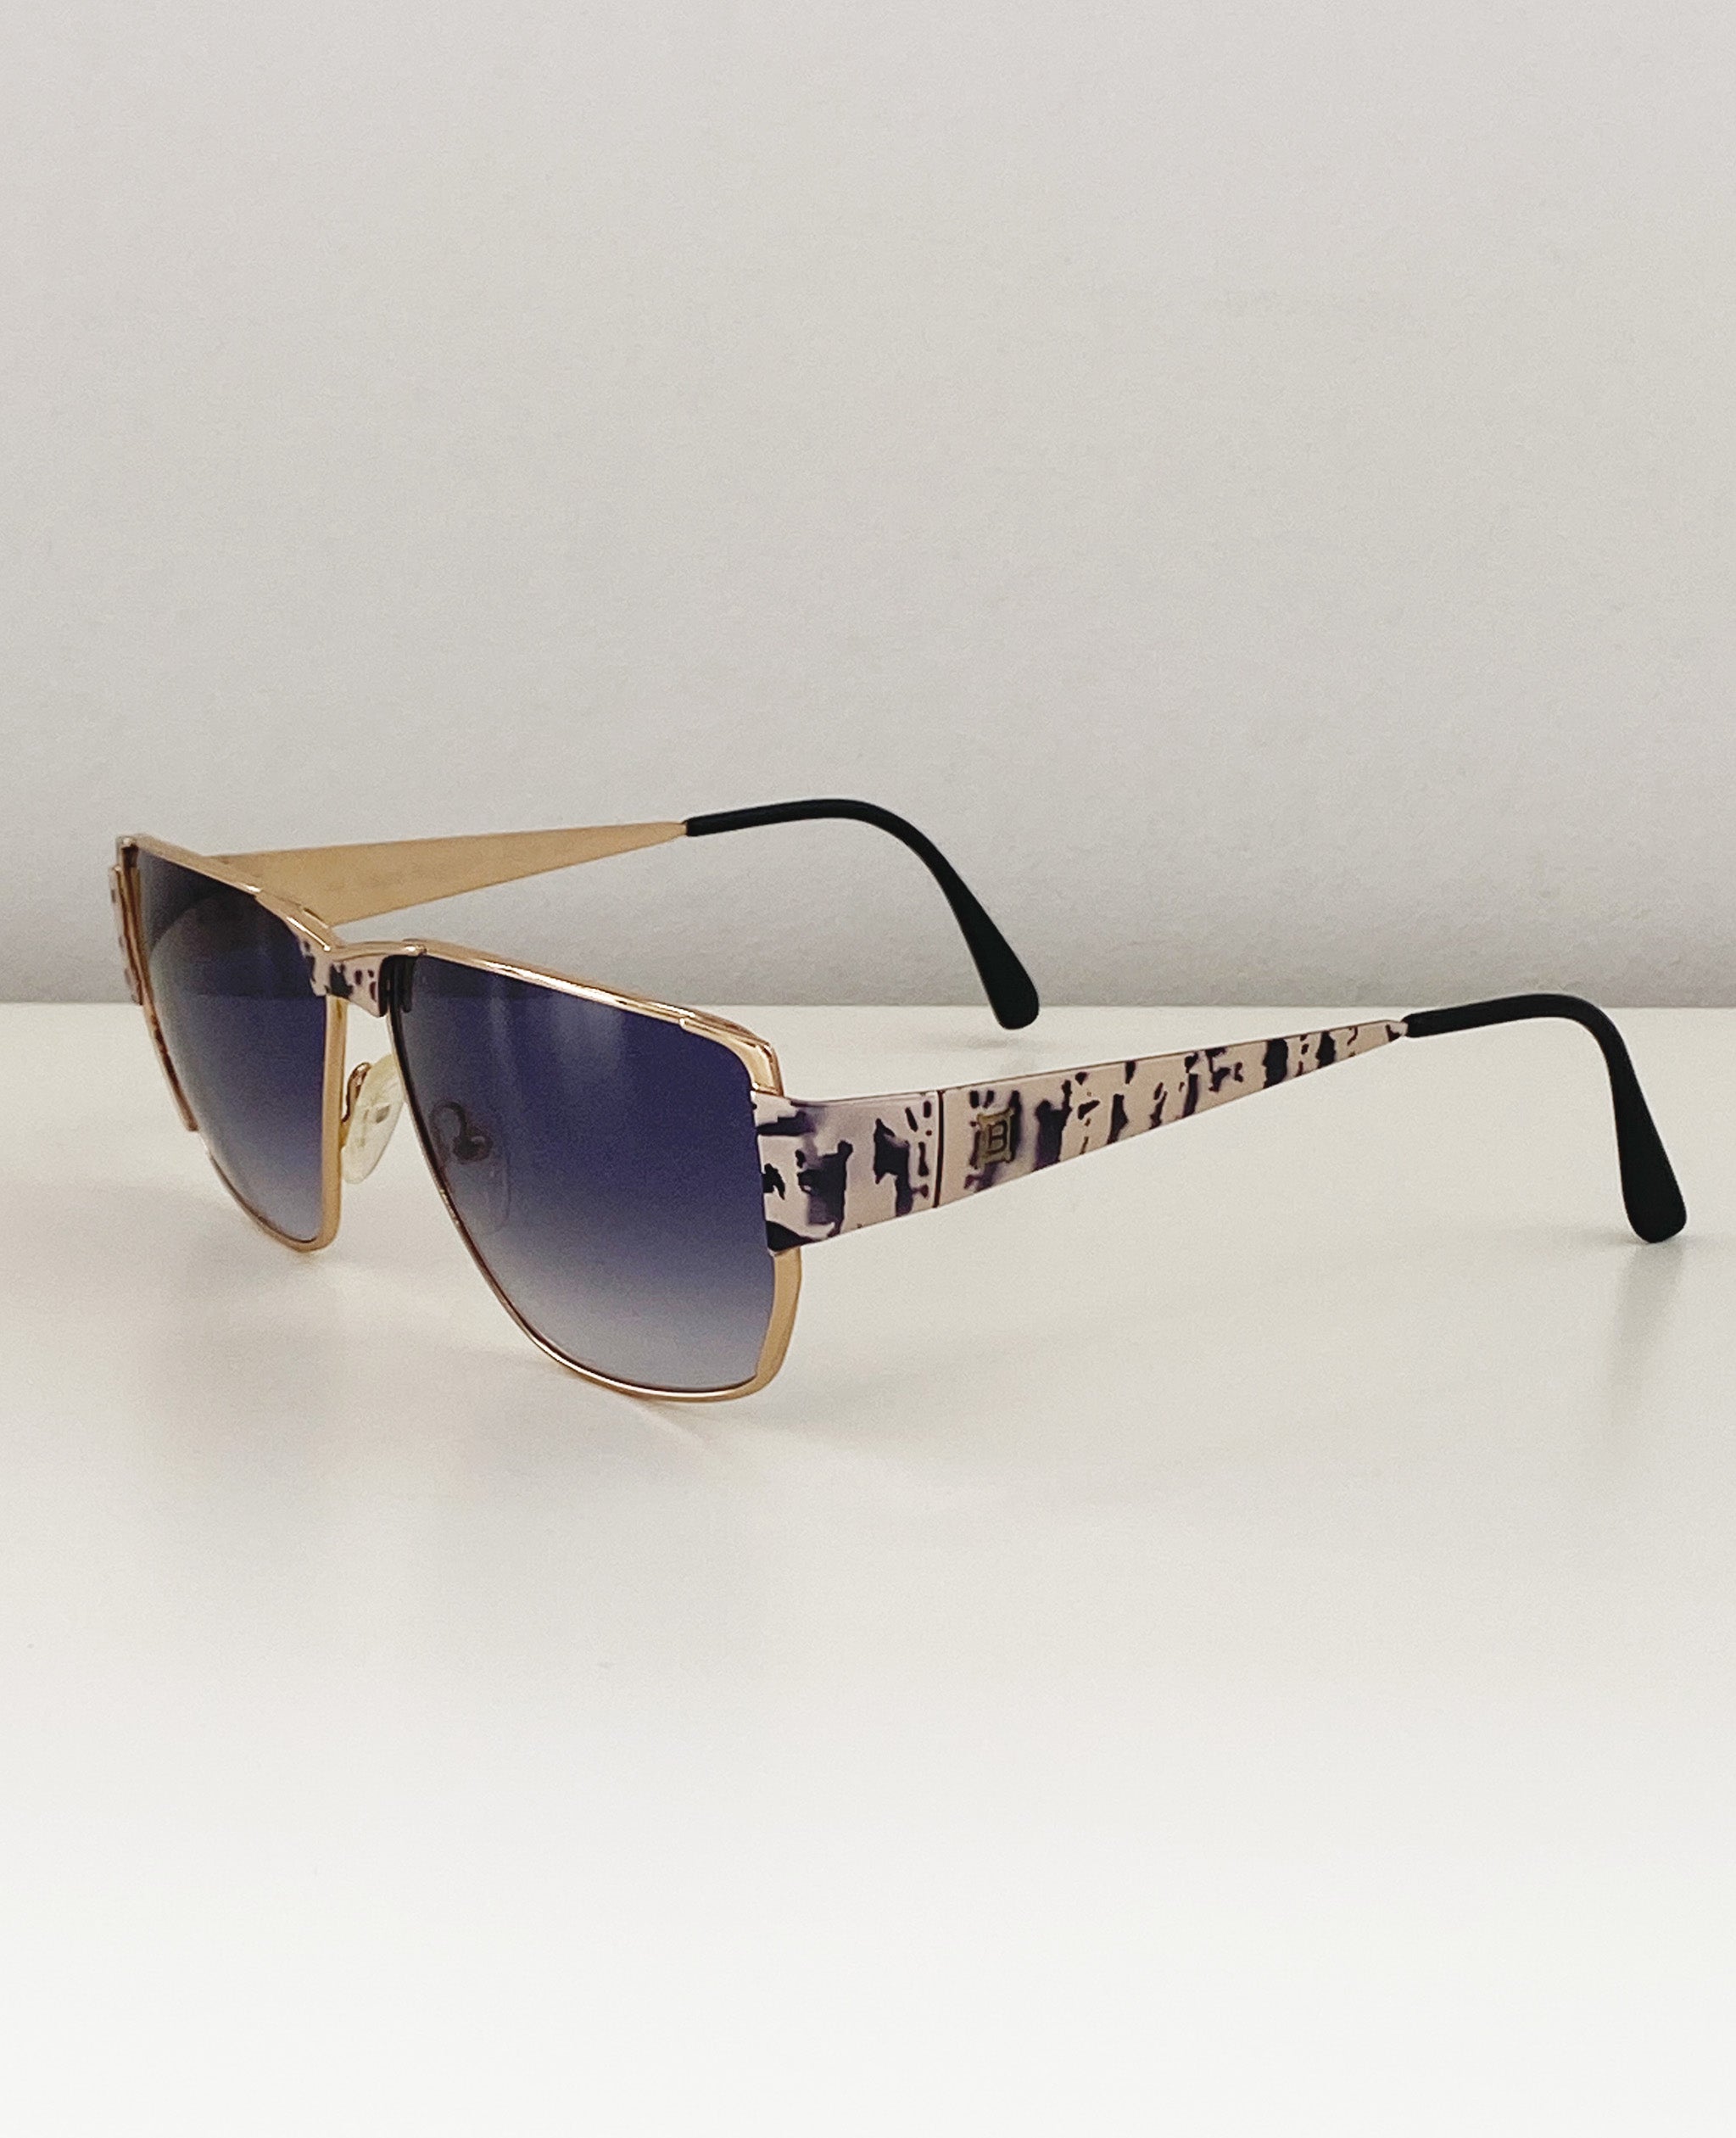 Sunglasses with Ink Splatter Pattern